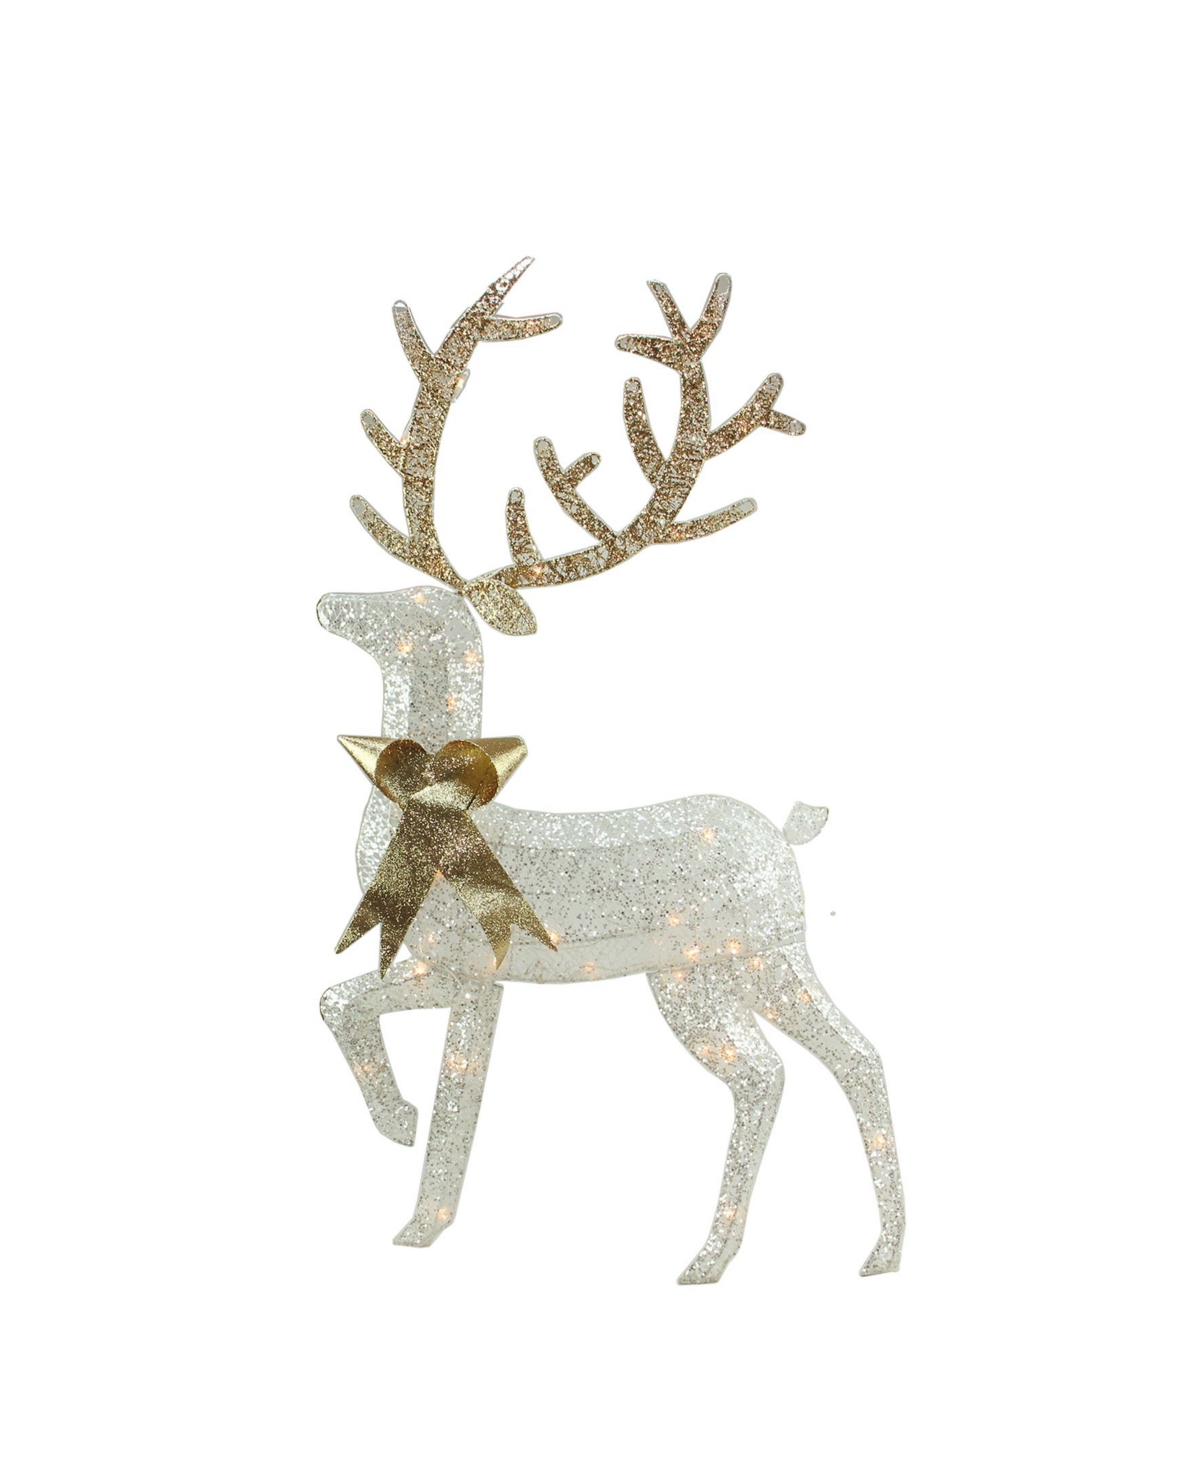 Lighted Glitter Reindeer Christmas Yard Art Decoration - Silver